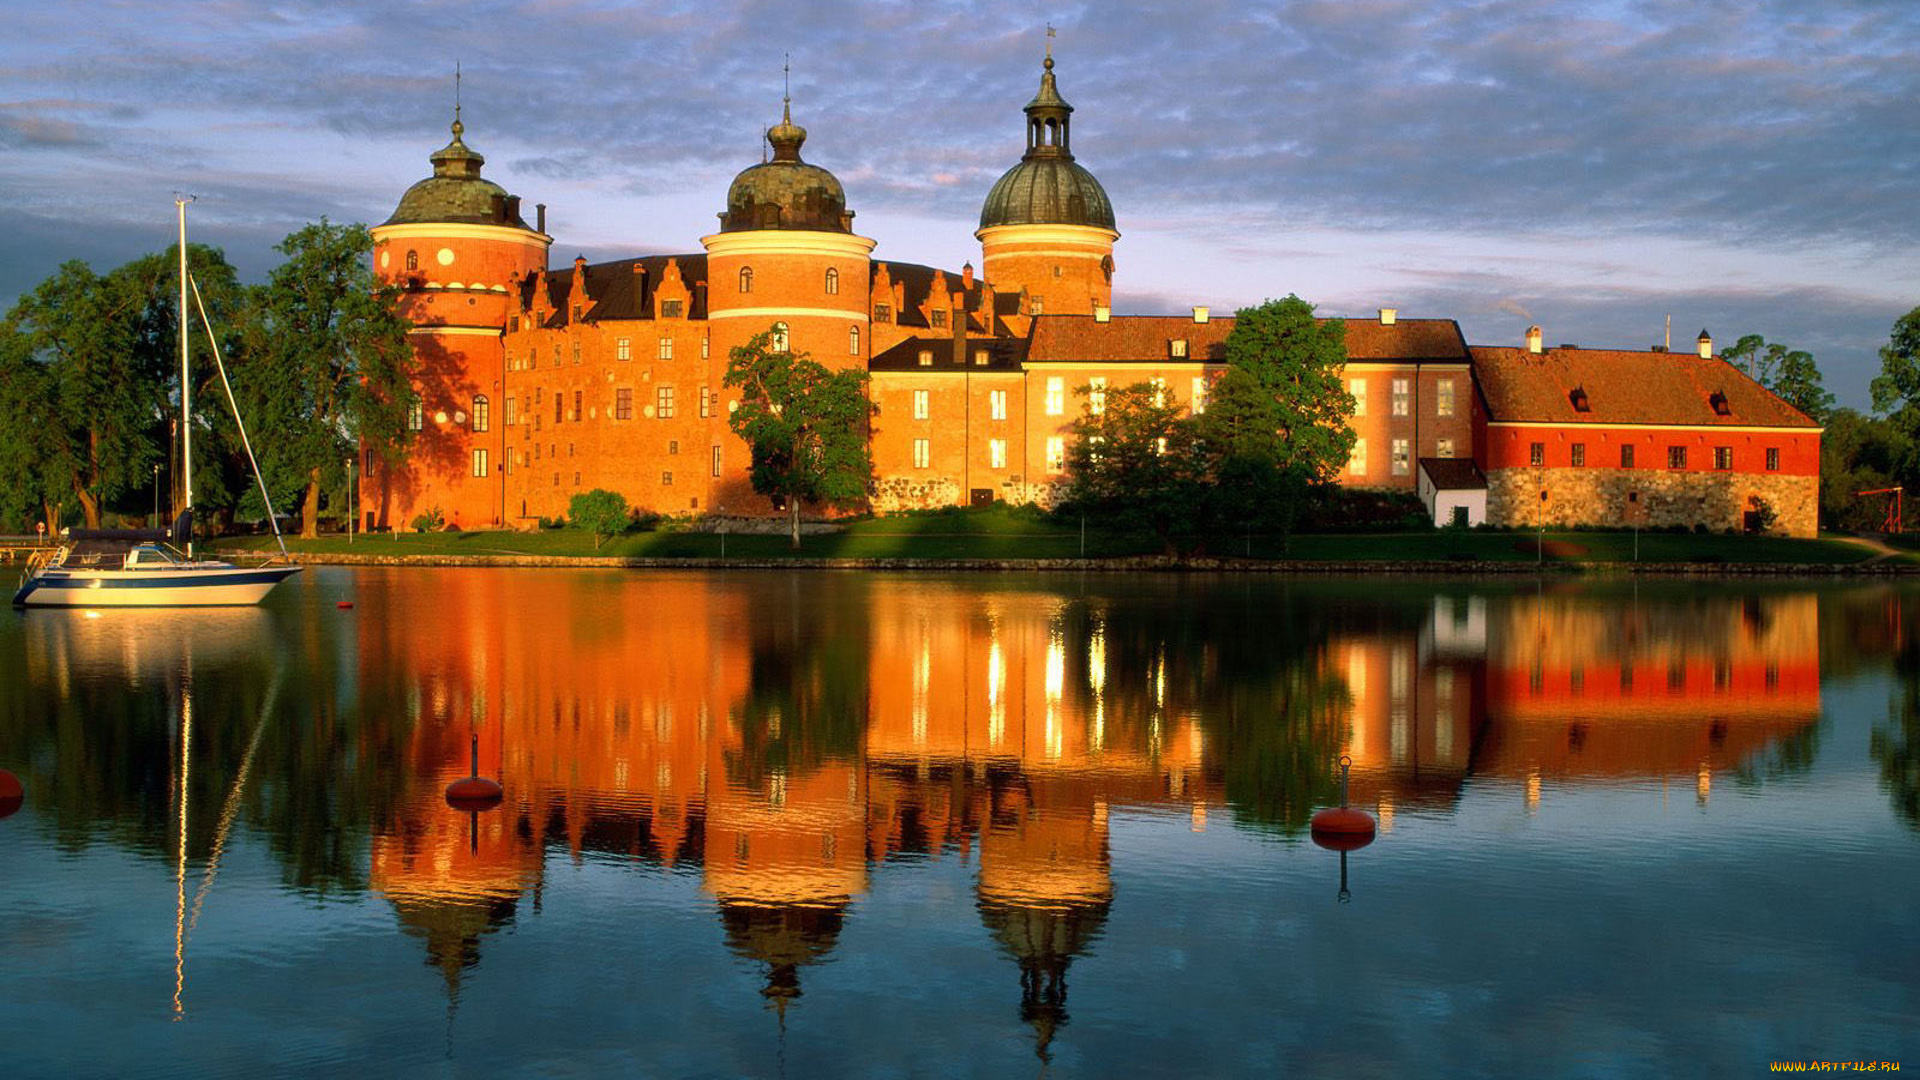 gripsholm, castle, , mariefred, , stockholm, , sweden, города, замки, швеции, яхта, дворец, замок, отражение, облака, небо, деревья, озеро